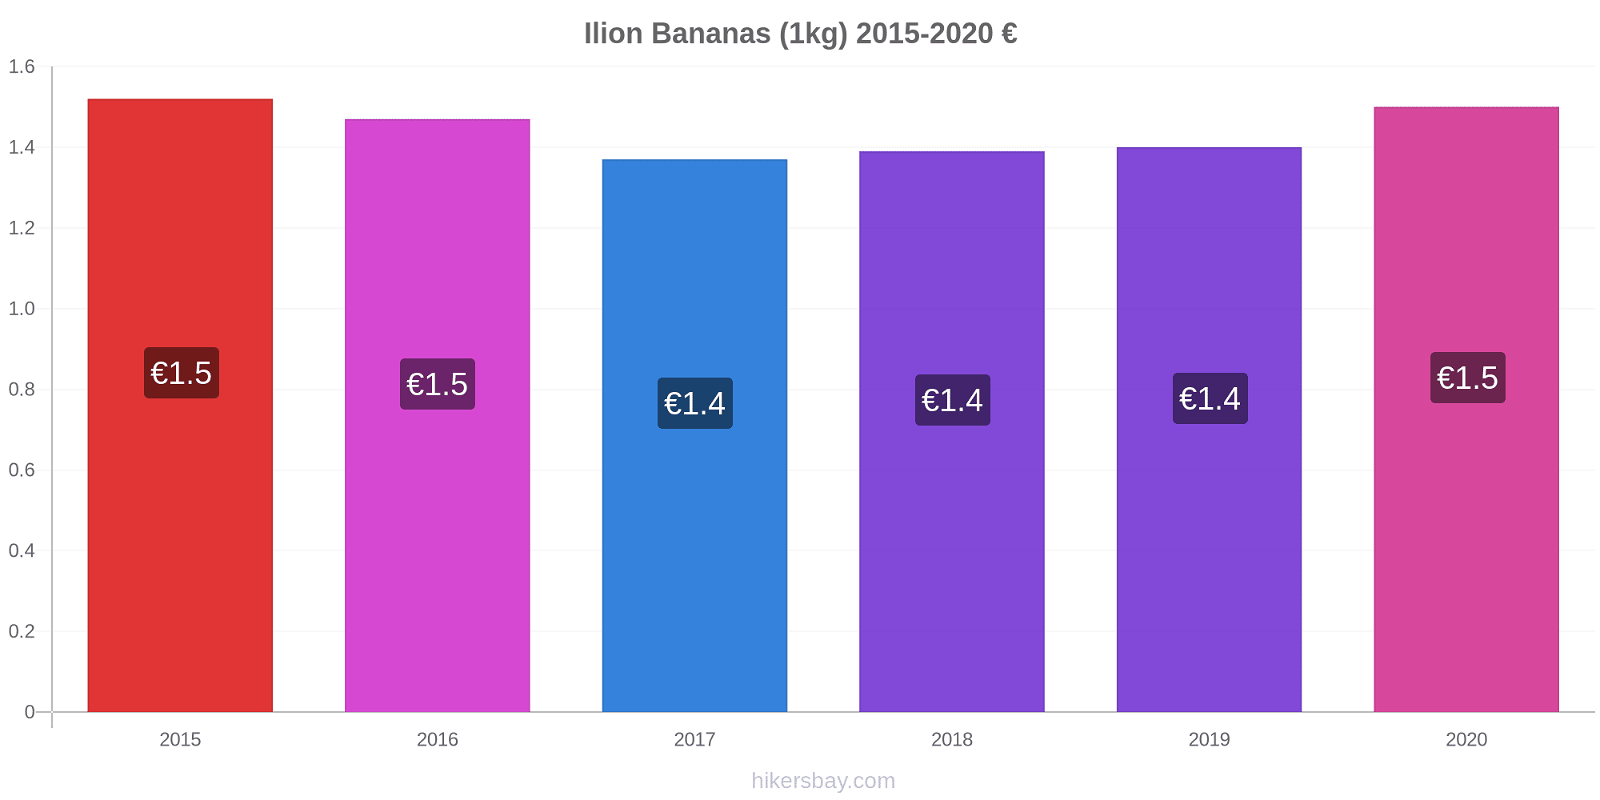 Ilion price changes Bananas (1kg) hikersbay.com